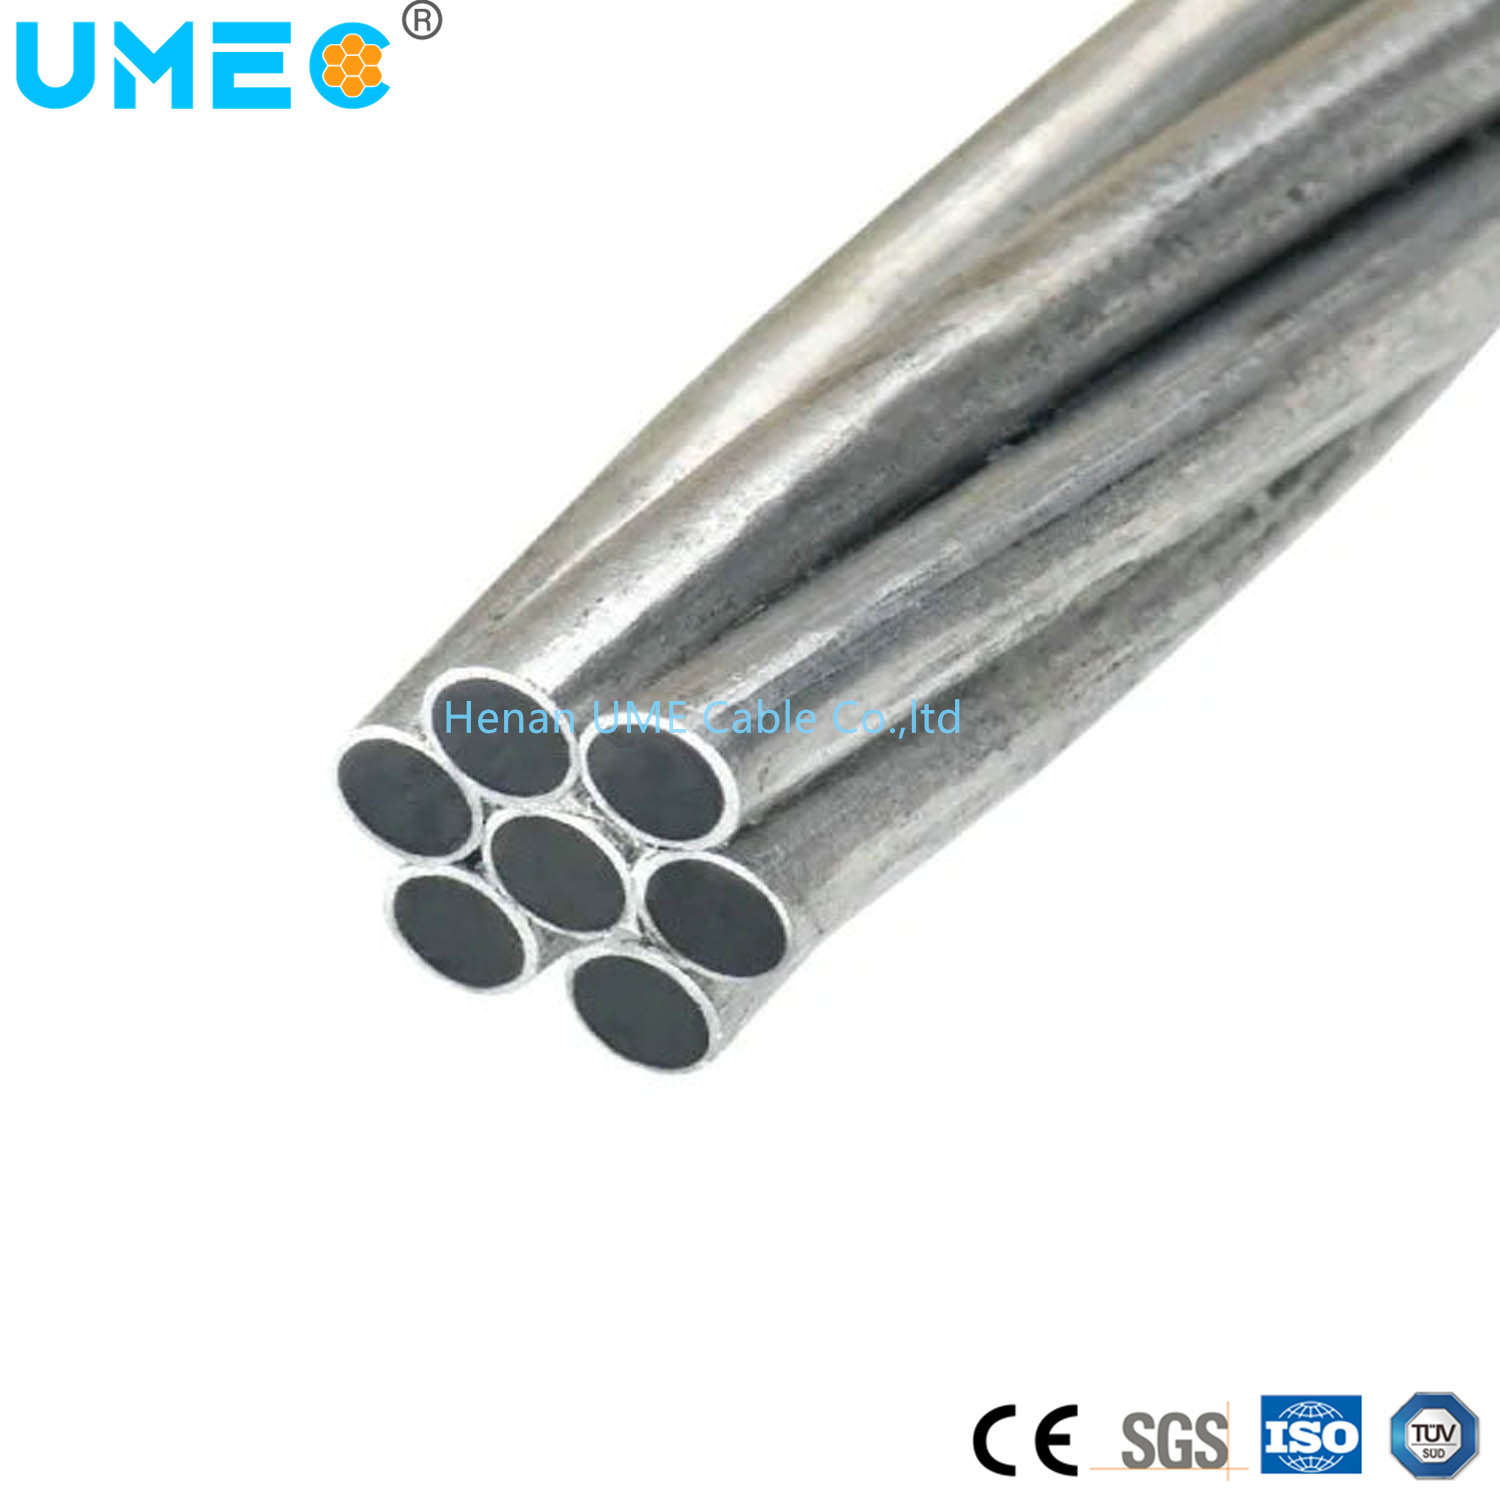 20.3% Aluminum Clad Steel Wire (Alumoweld) -Acs Aluminum Clad Steel Reinforced Wire (ACS Cable)